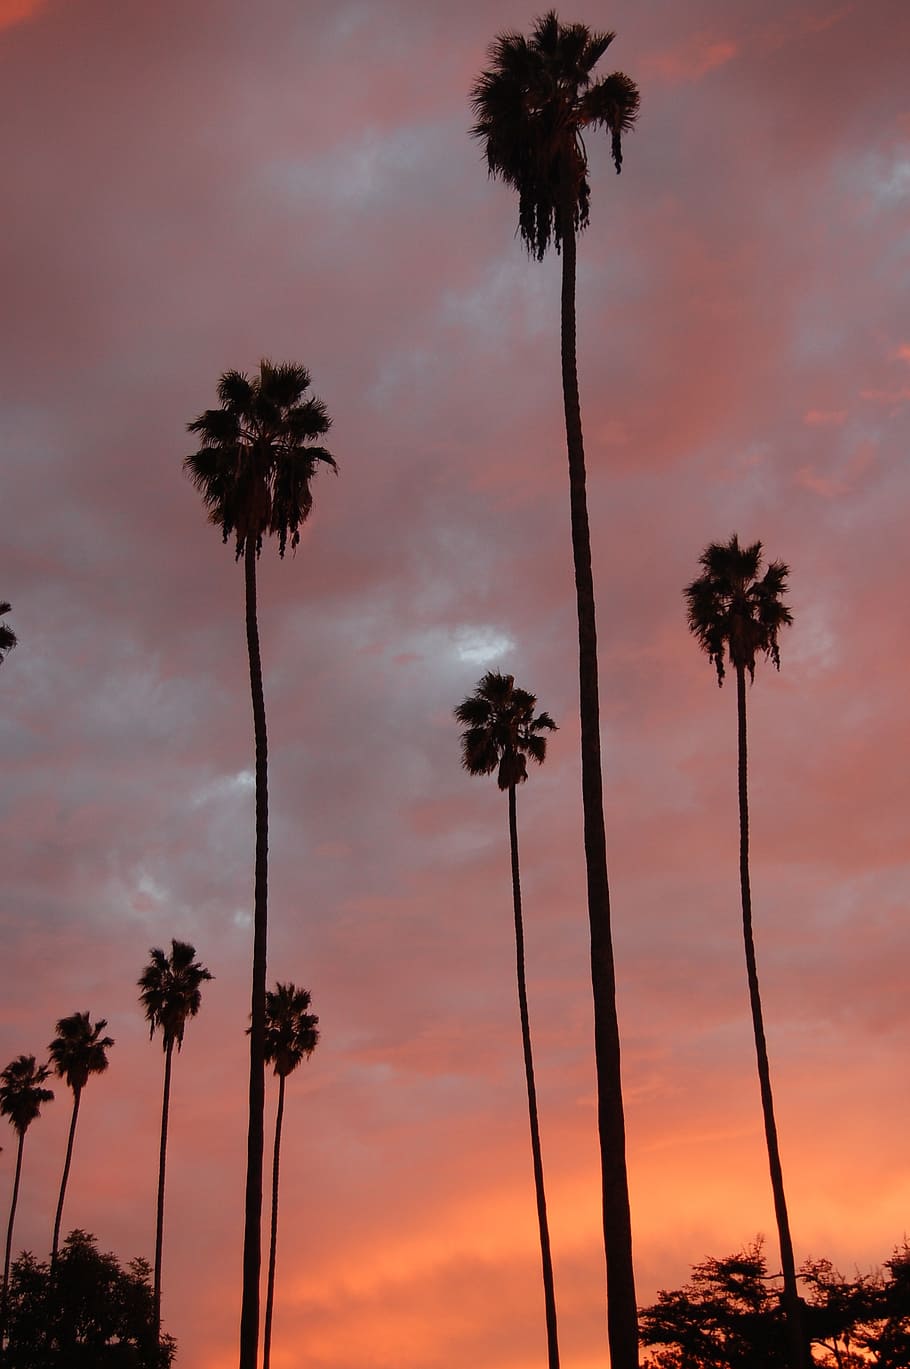 palm trees, palms, sunset, tree, orange, clouds, pink, sky, nature, paradise